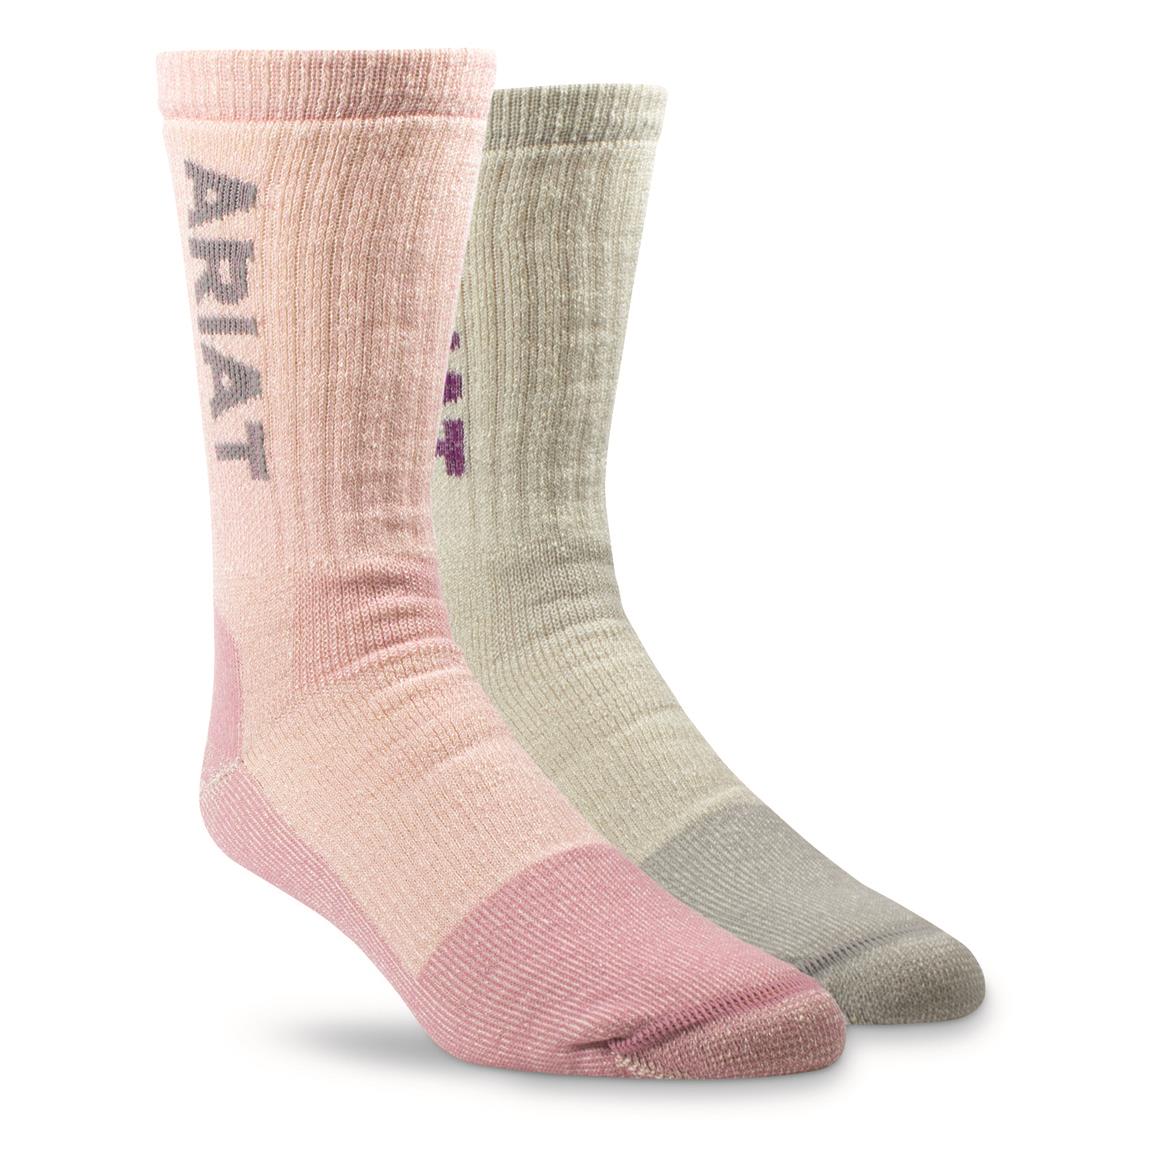 Ariat Women's Midweight Merino Wool Blend Steel Toe Crew Socks, 2 Pairs, Oatmeal/pink